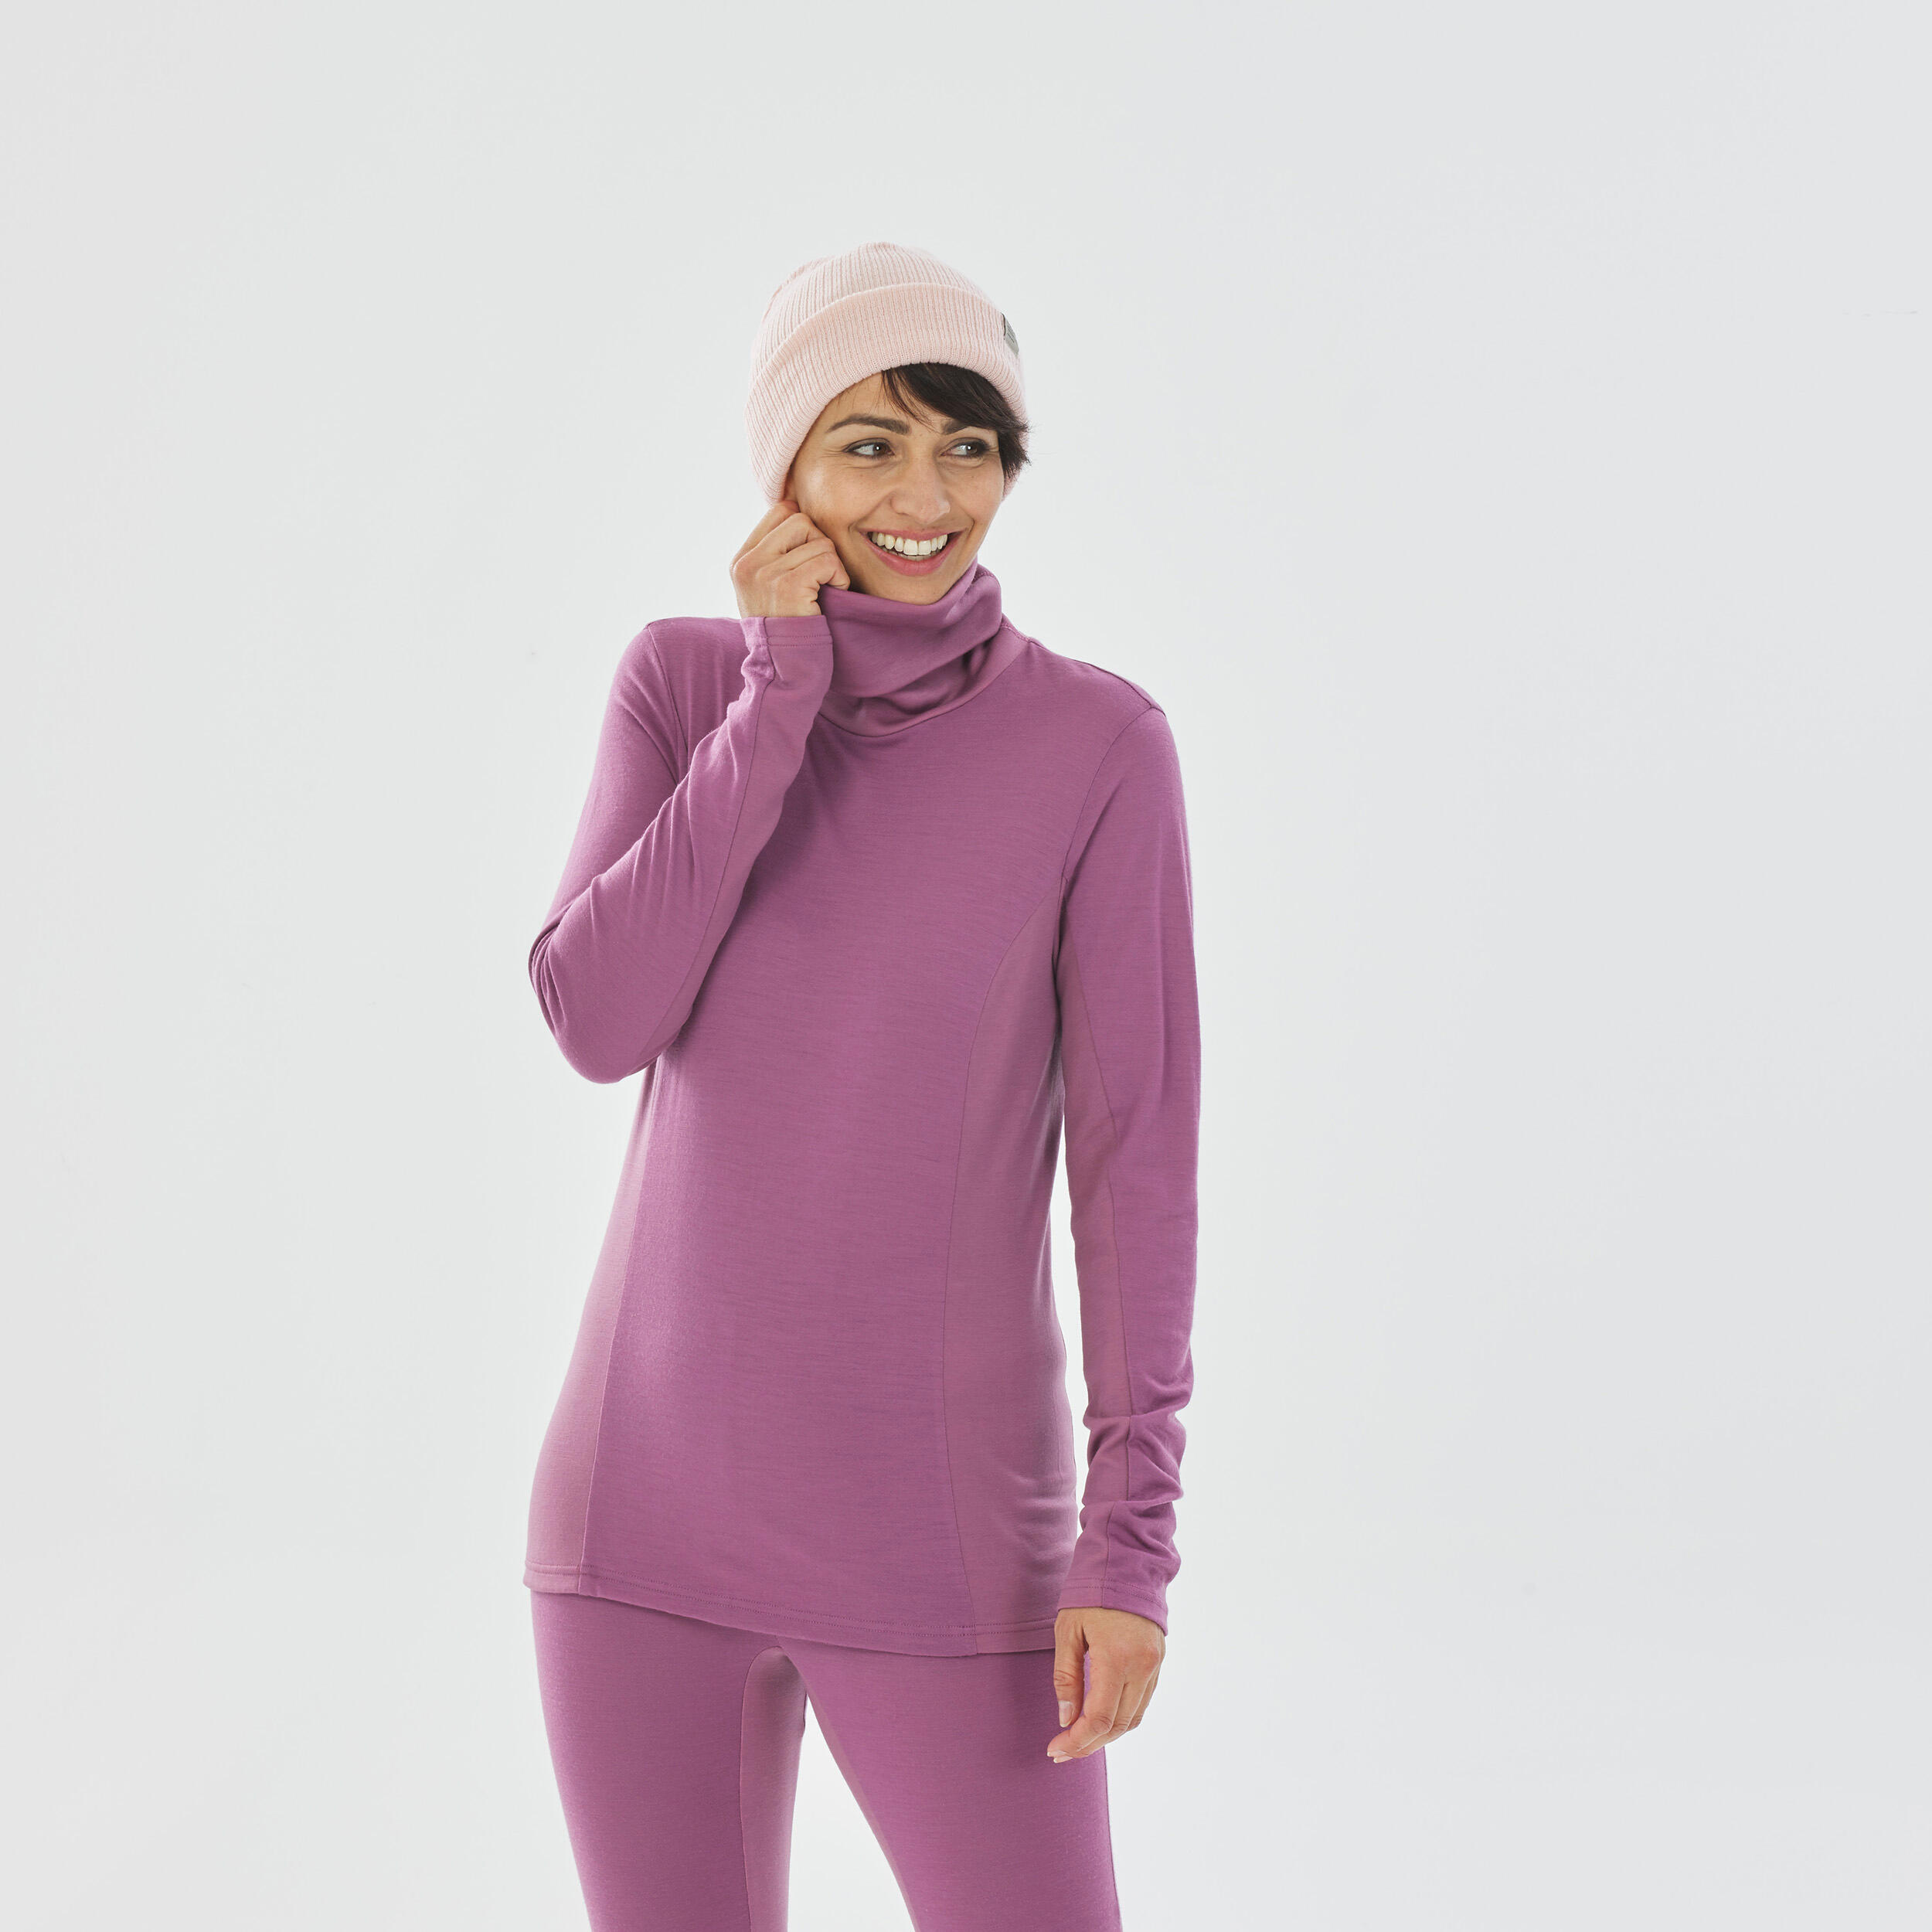 Women’s Ski Base Layer Top - BL 900 Wool High Neck -
Pink 4/10